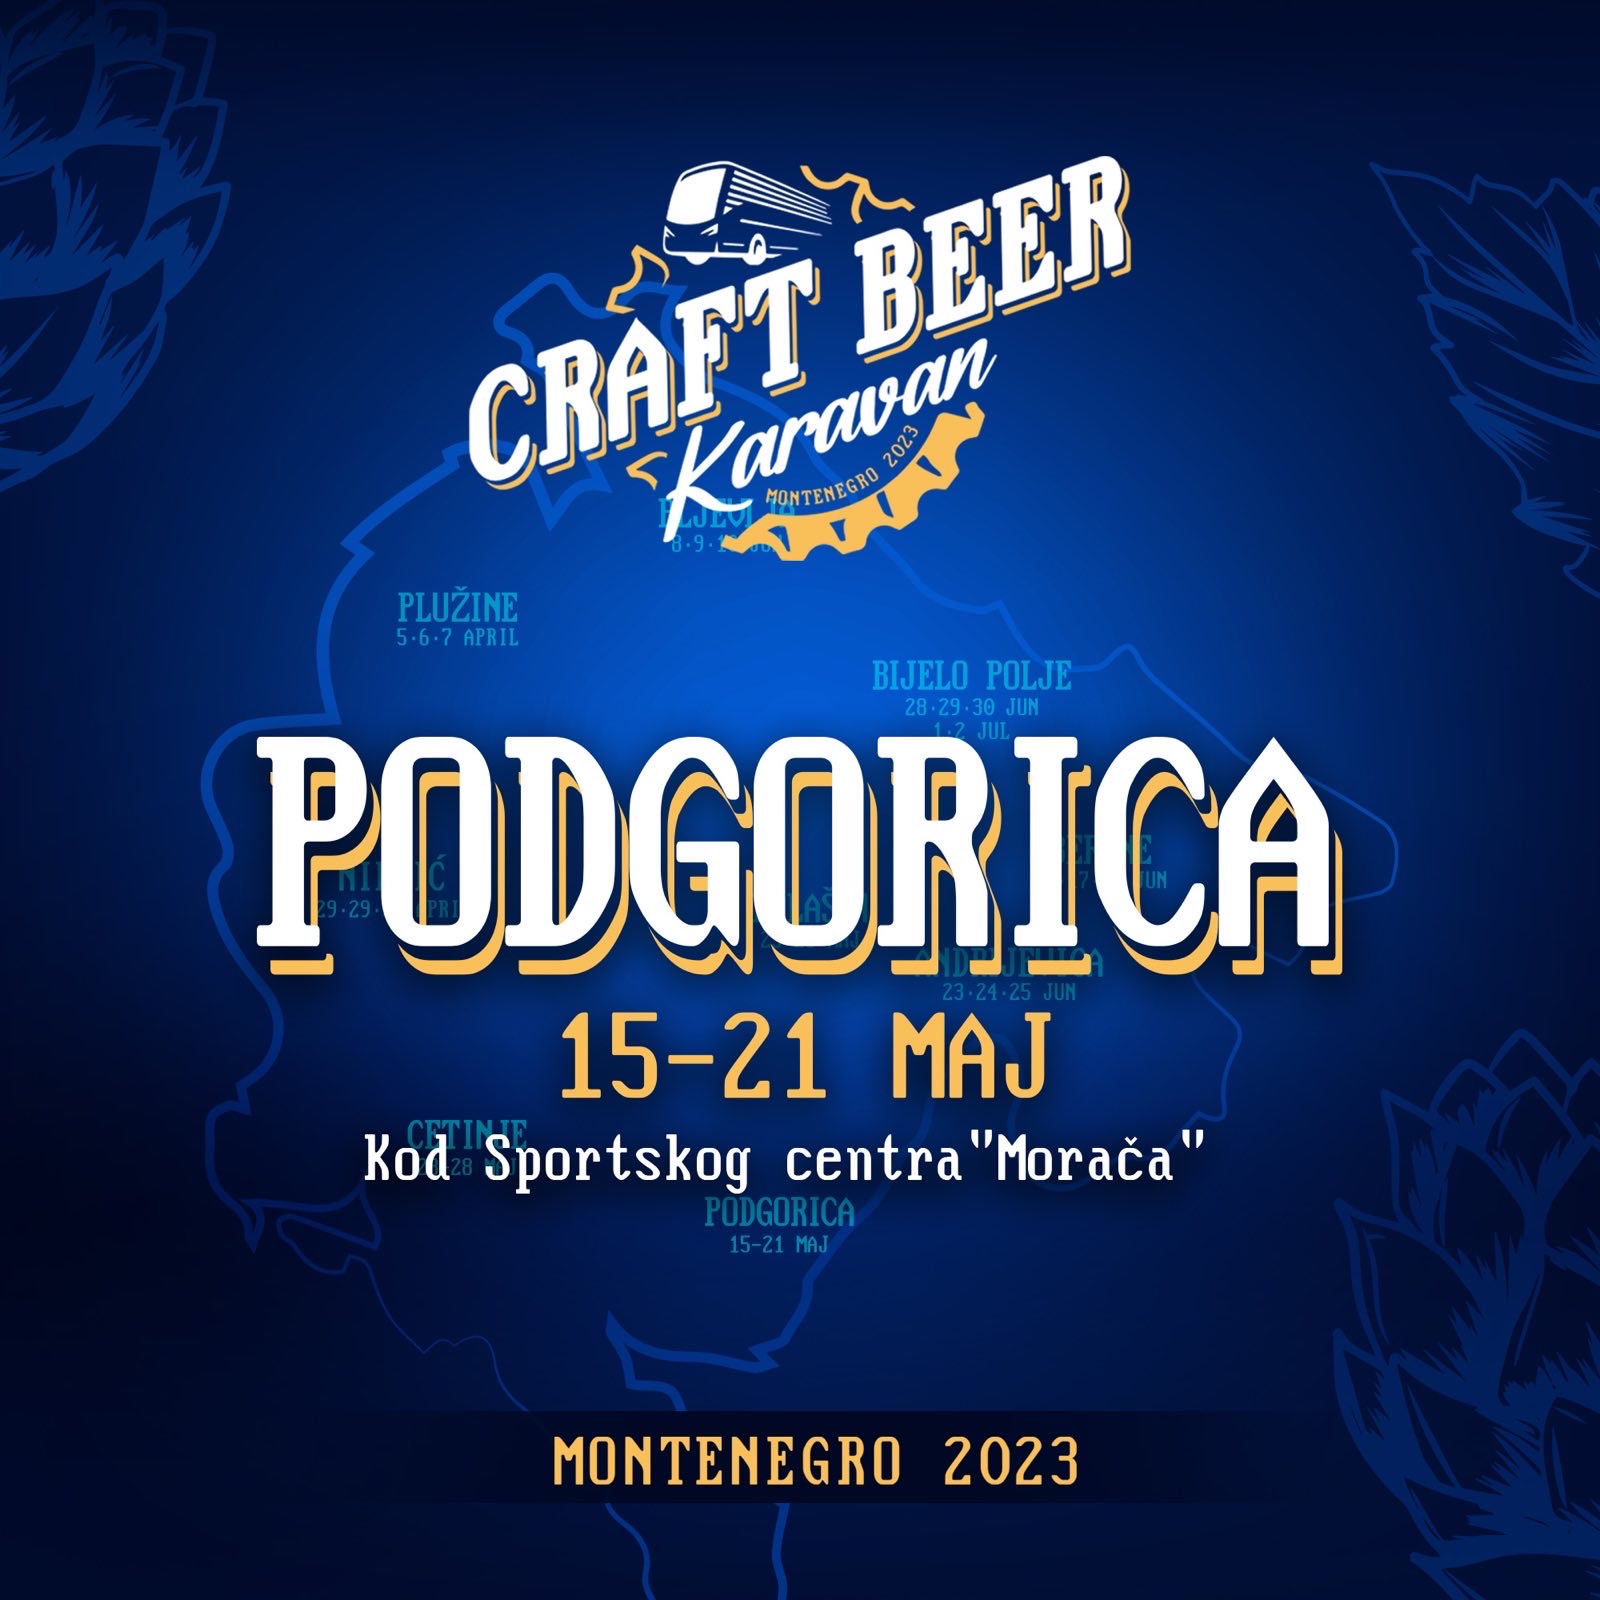 Prvi “Craft Beer Karavan” u Podgorici